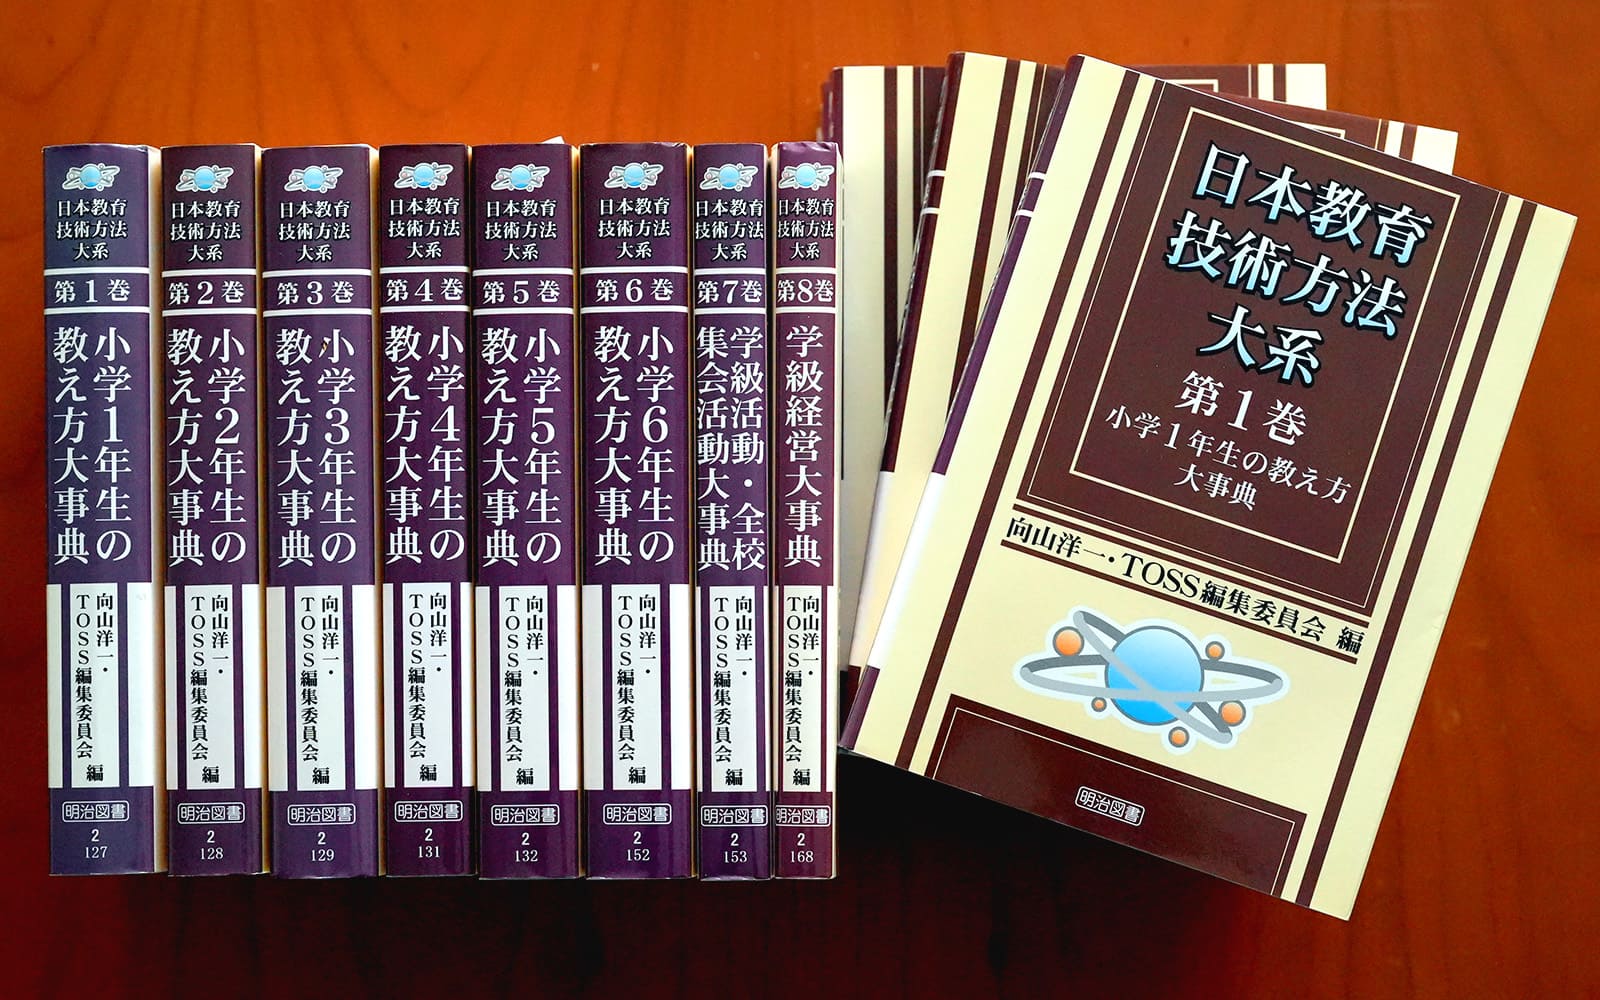 法則化運動は『日本教育技術方法大系』を出版し解散した（『日本教育技術方法大系』 2001）